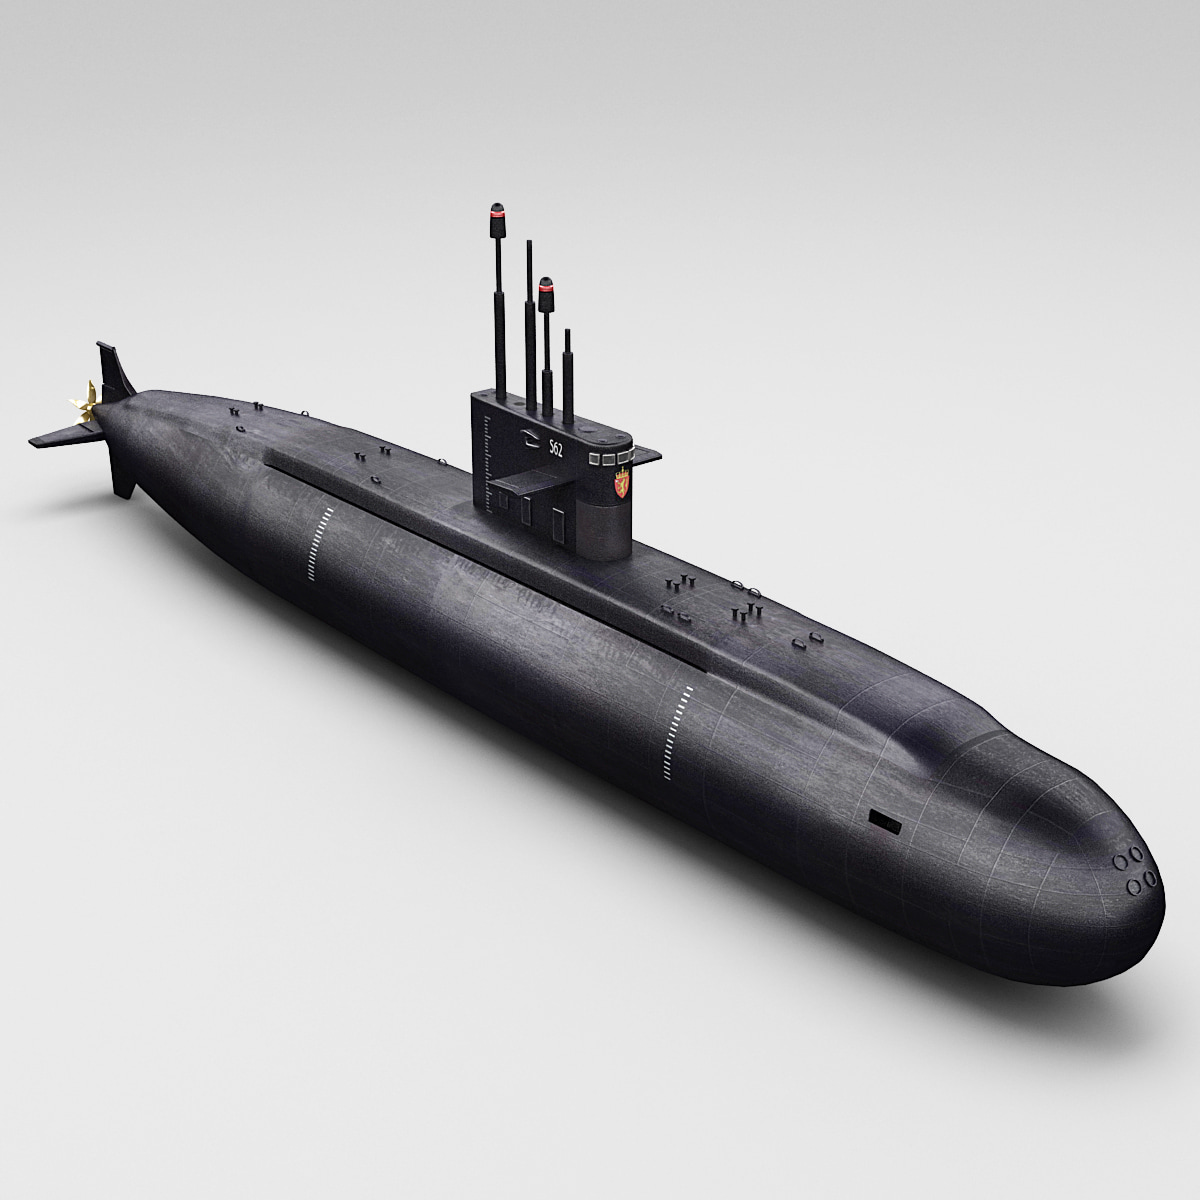 Russian_Lada_Class_Submarine_0000.jpgecc42d0f-83c3-40bb-9366-25cfeee1df7bOriginal.jpg